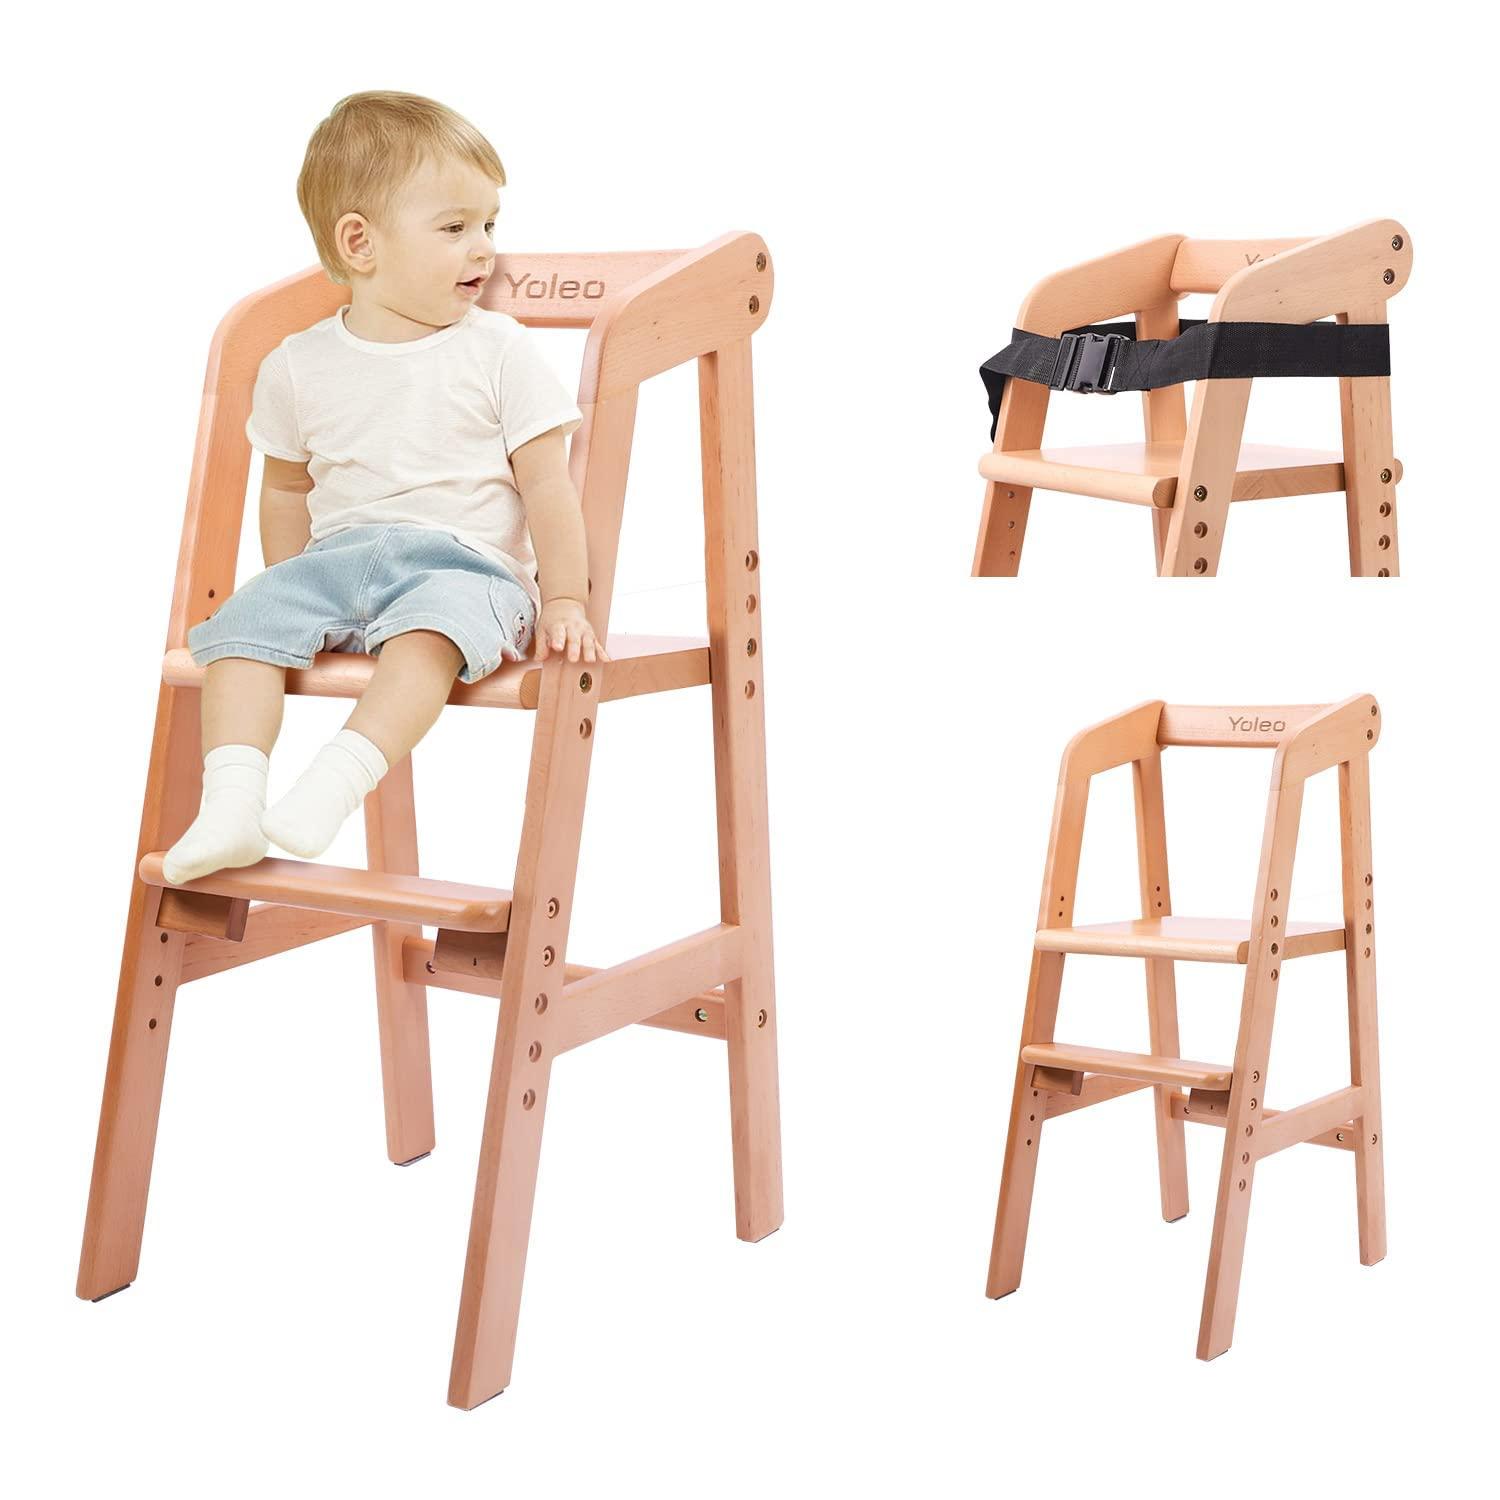 Montessori Yoleo Adjustable Wooden High Chair Natural